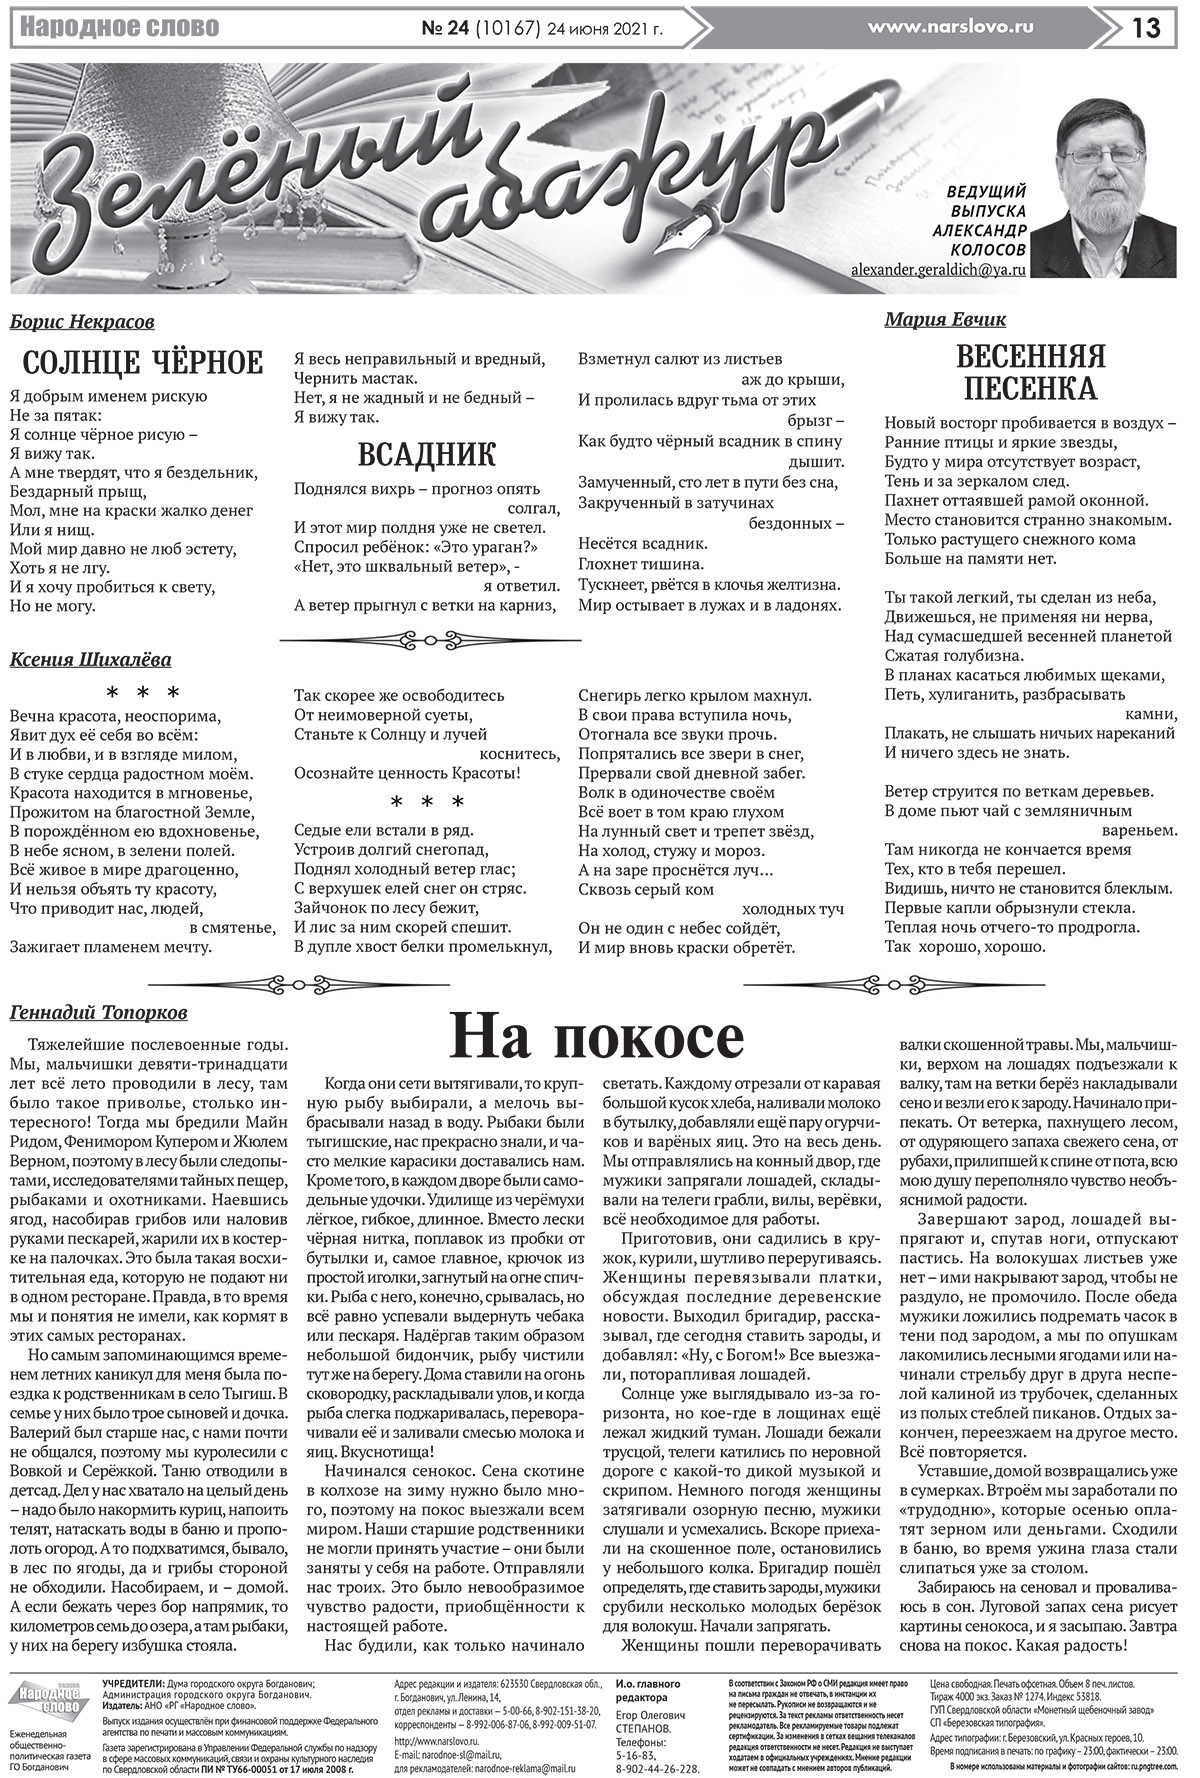 Газета "Народное слово" - Зелёный абажур. (№24 (10167) 24.06.2021г.)